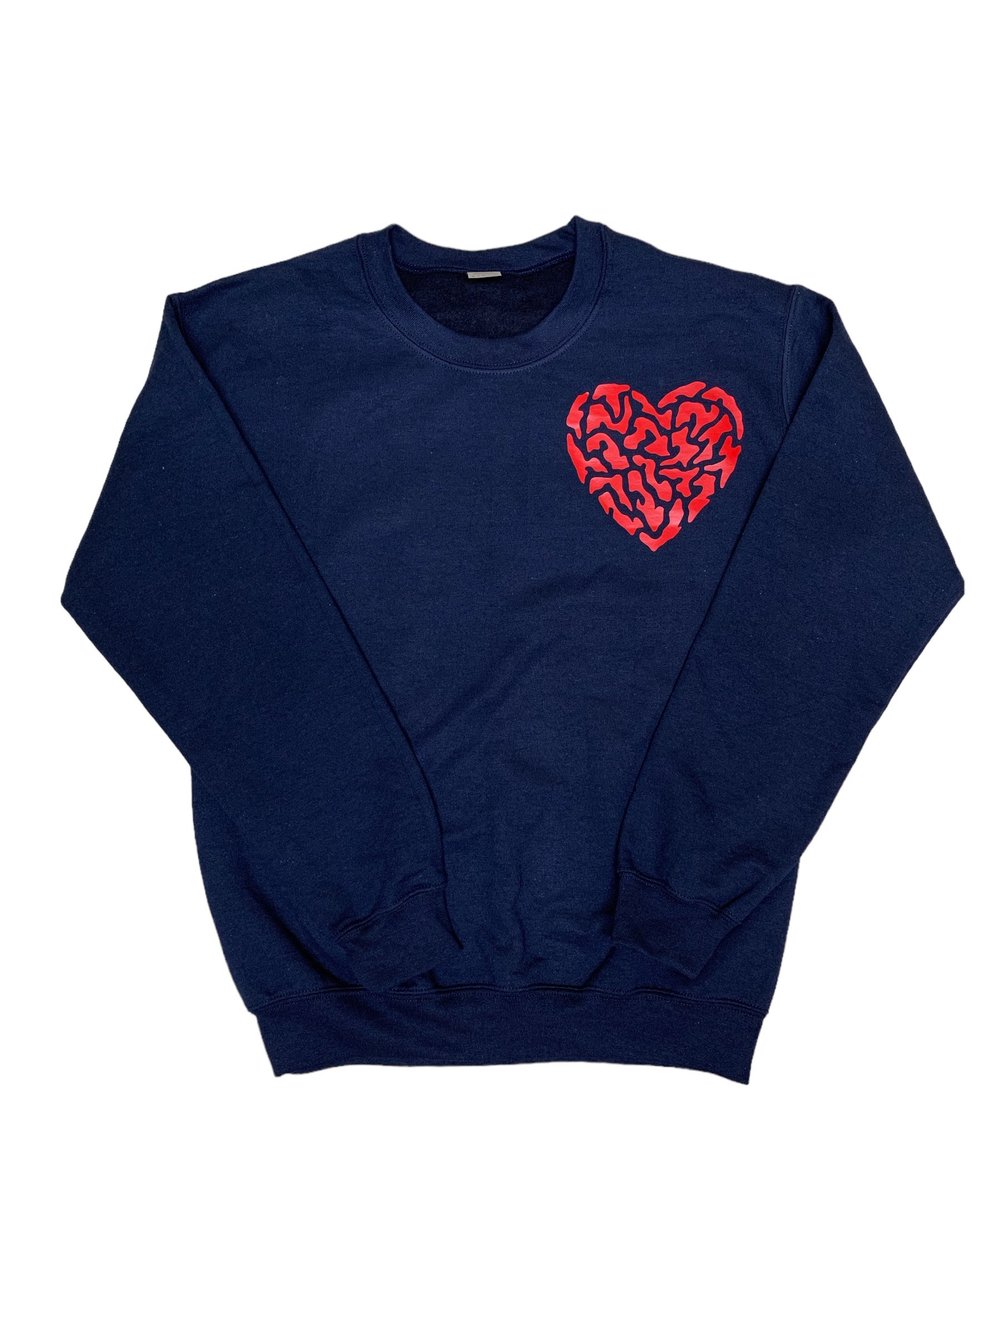 Image of “SOLE LOVE” Crewneck Sweater 